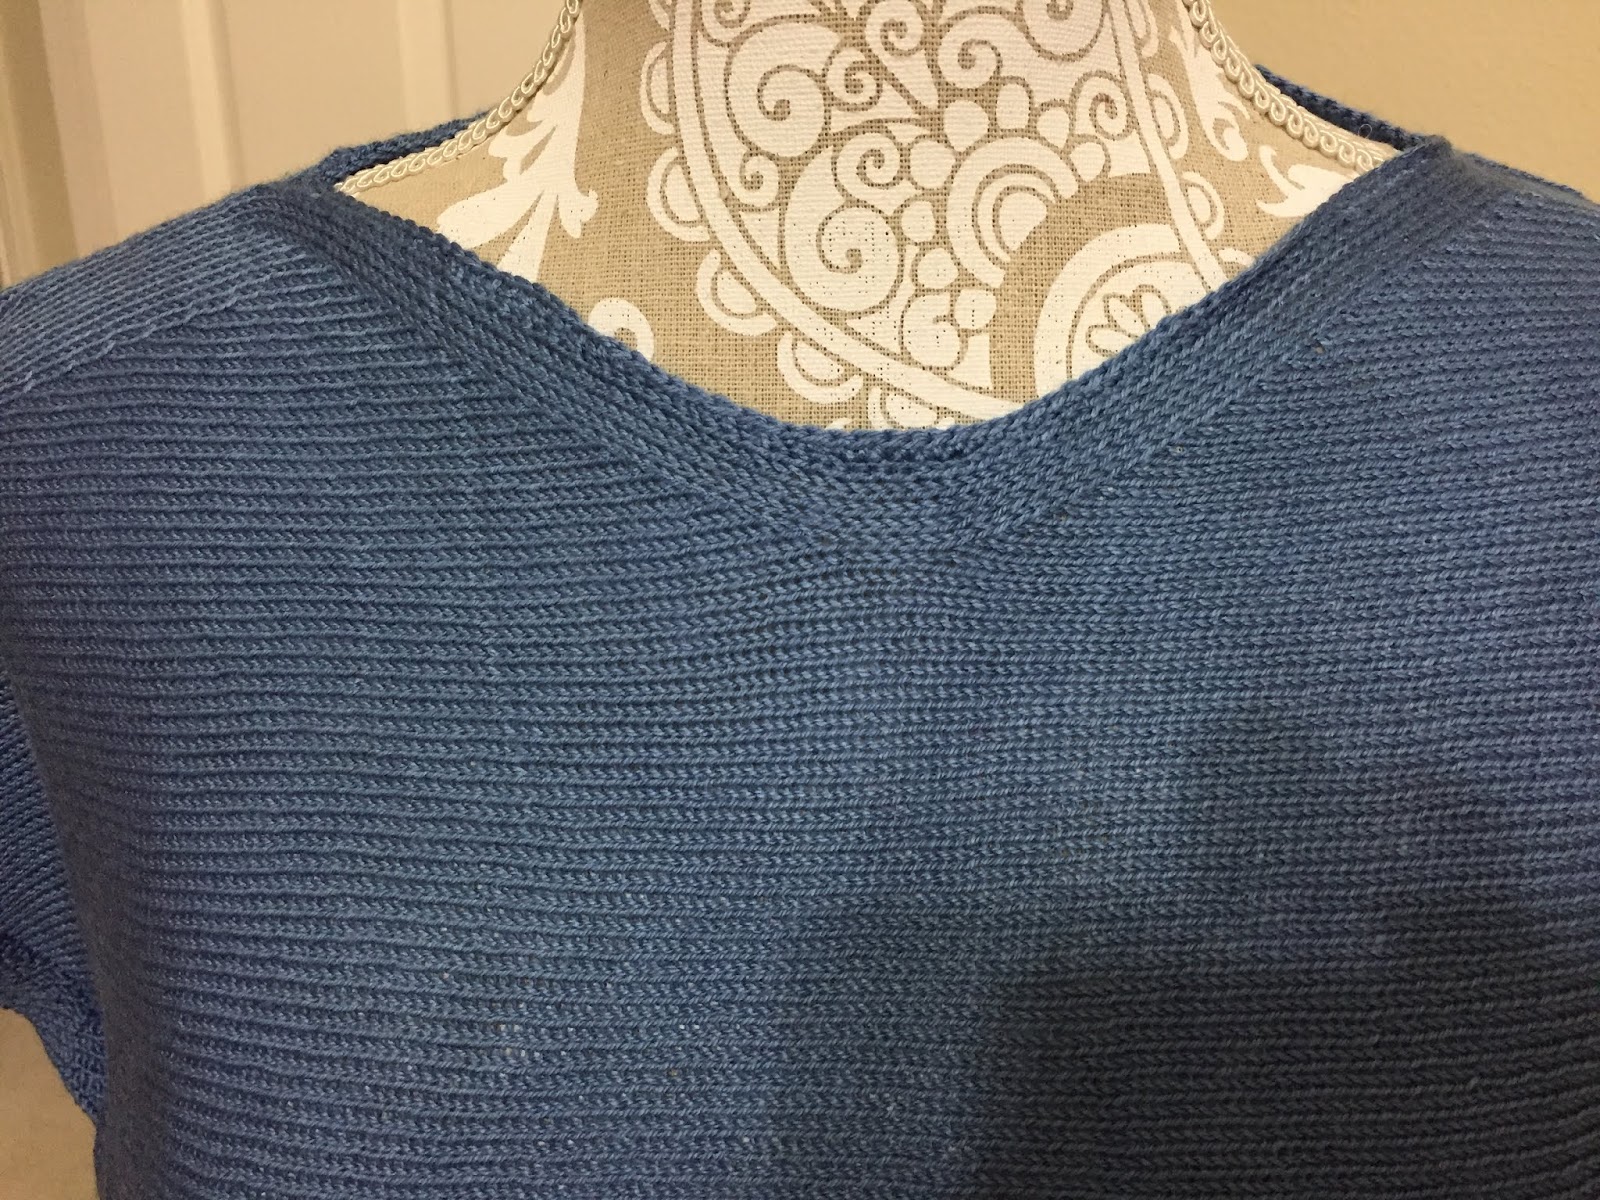 Karla's Machine Knitting: Sideways knitted top